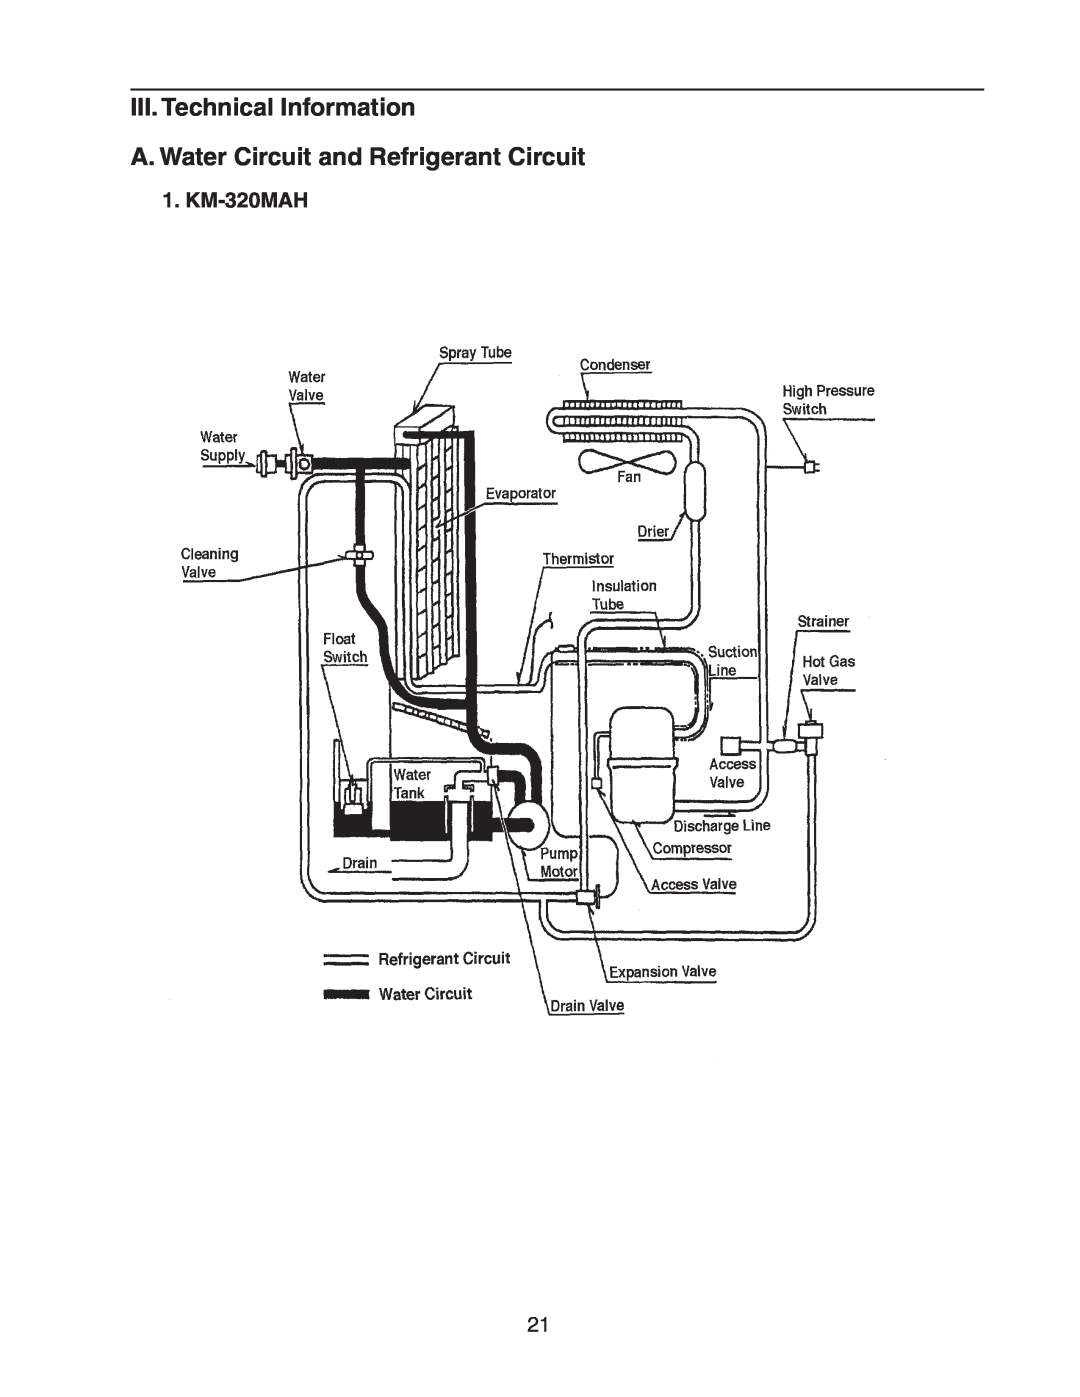 Hoshizaki KM-320MWH service manual III. Technical Information, A. Water Circuit and Refrigerant Circuit, KM-320MAH 